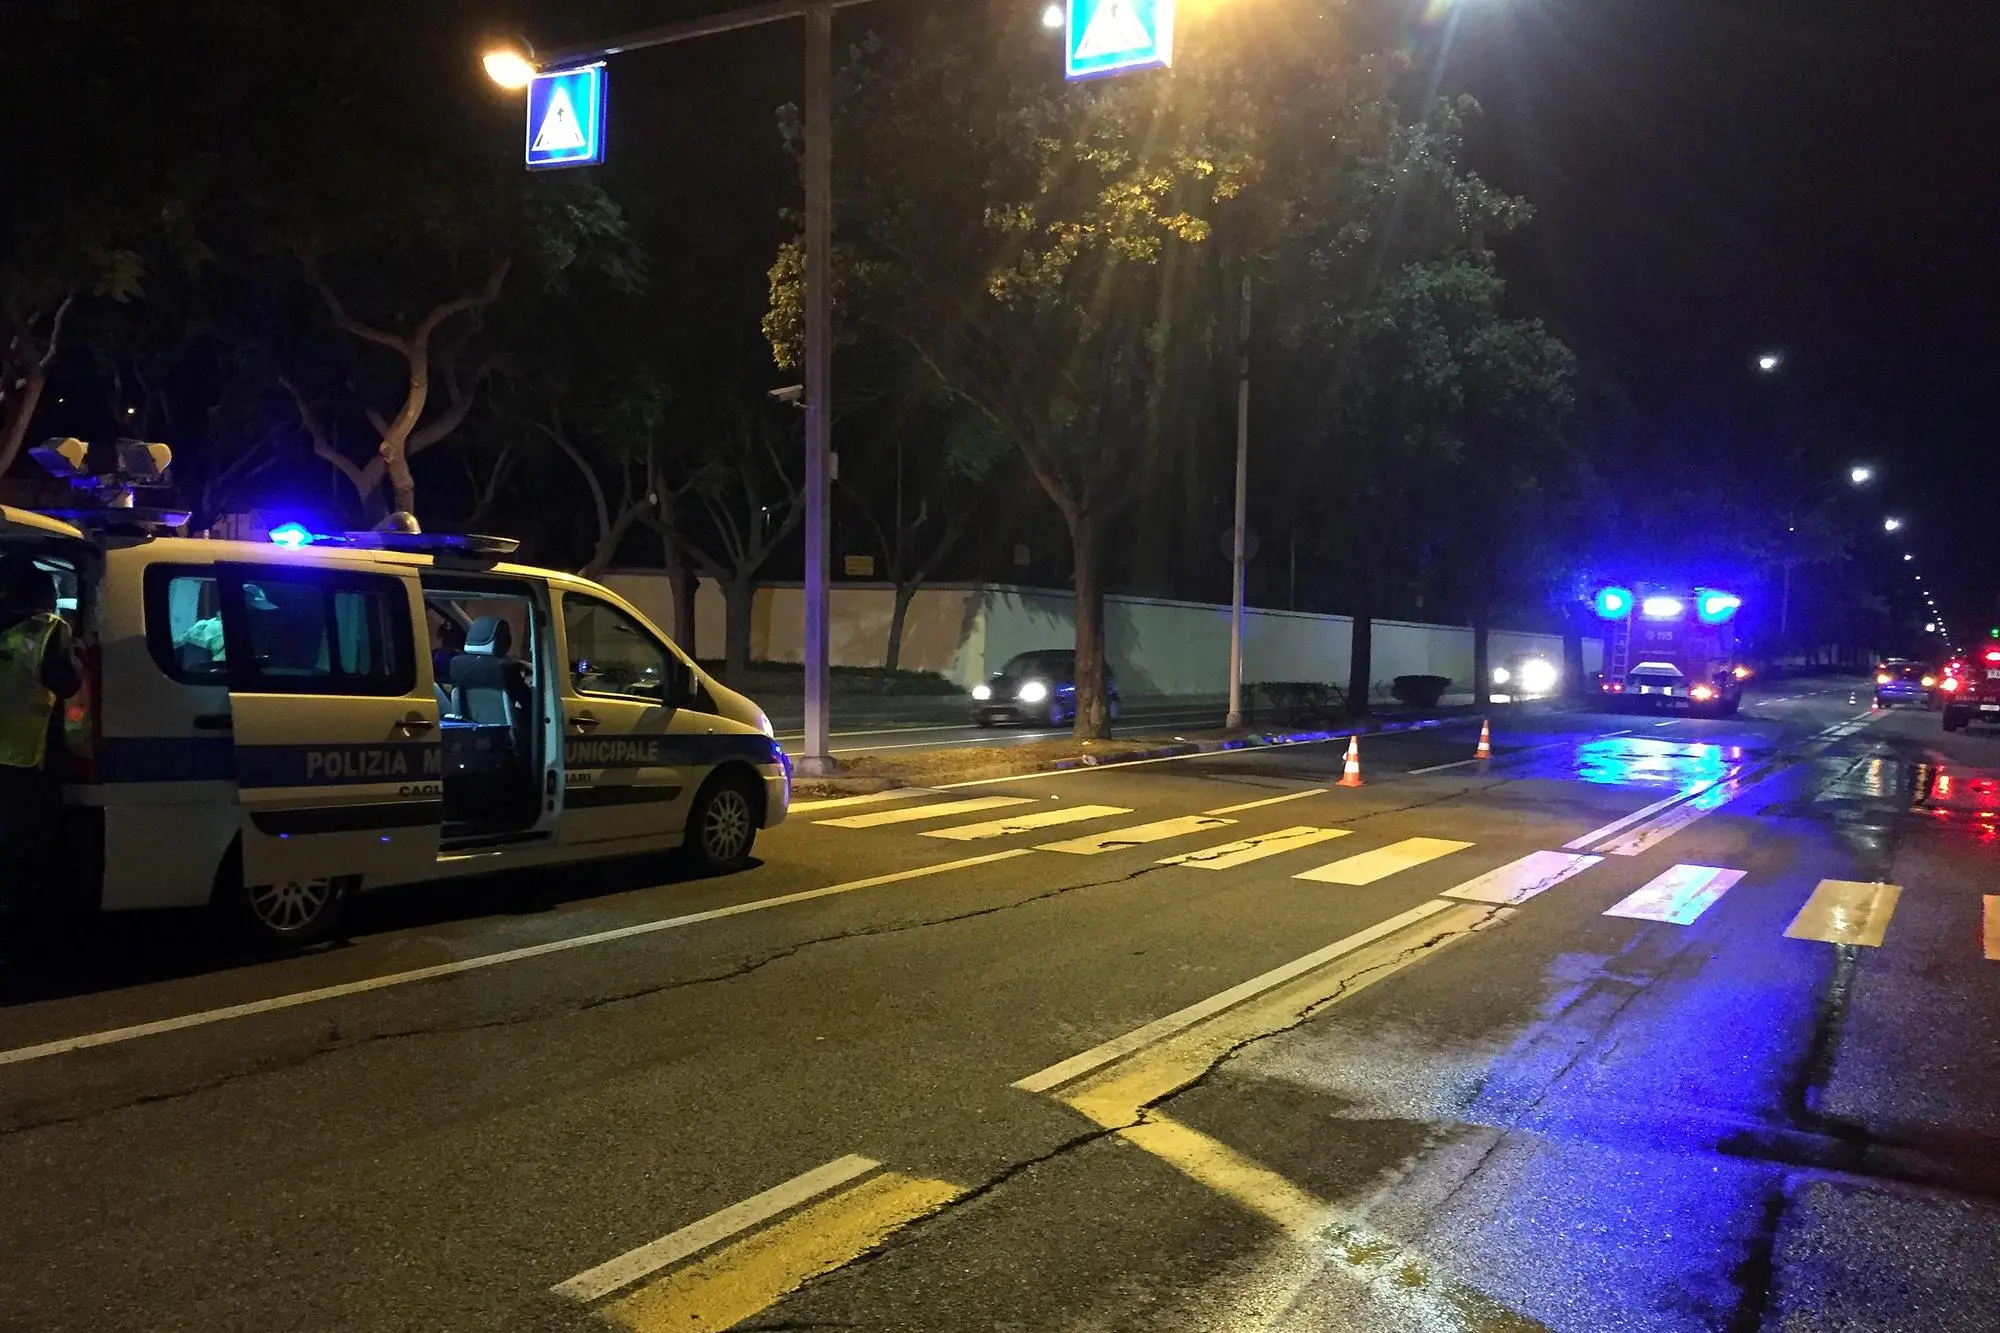 Un incidenrte in una strada di Cagliari